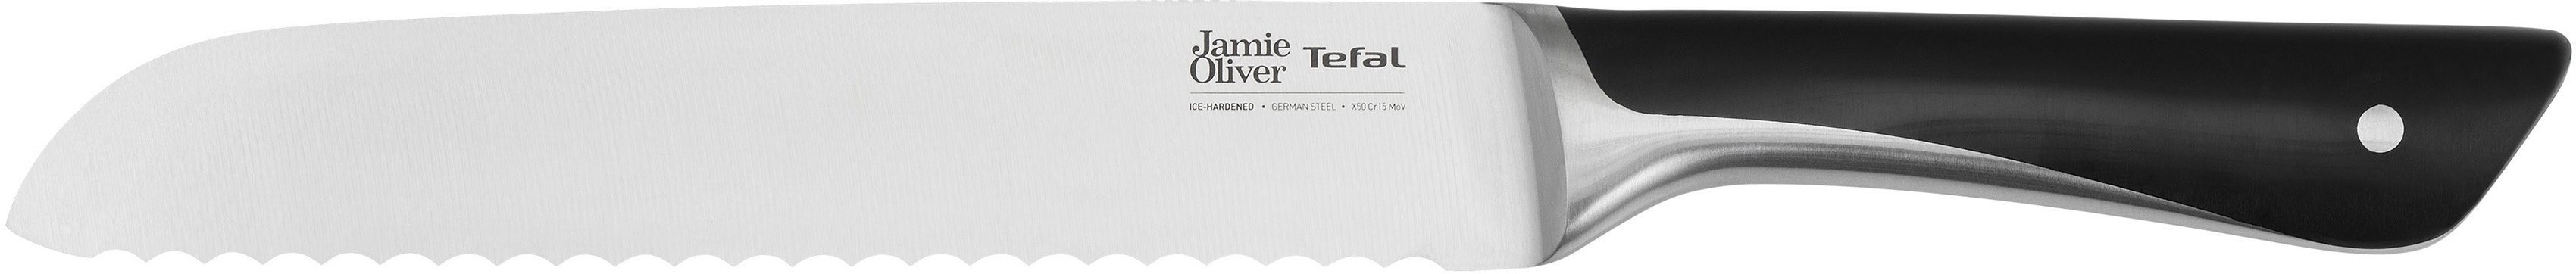 Tefal unverwechselbares Brotmesser Jamie K26703, Design, widerstandsfähig/langlebig Oliver hohe Leistung,